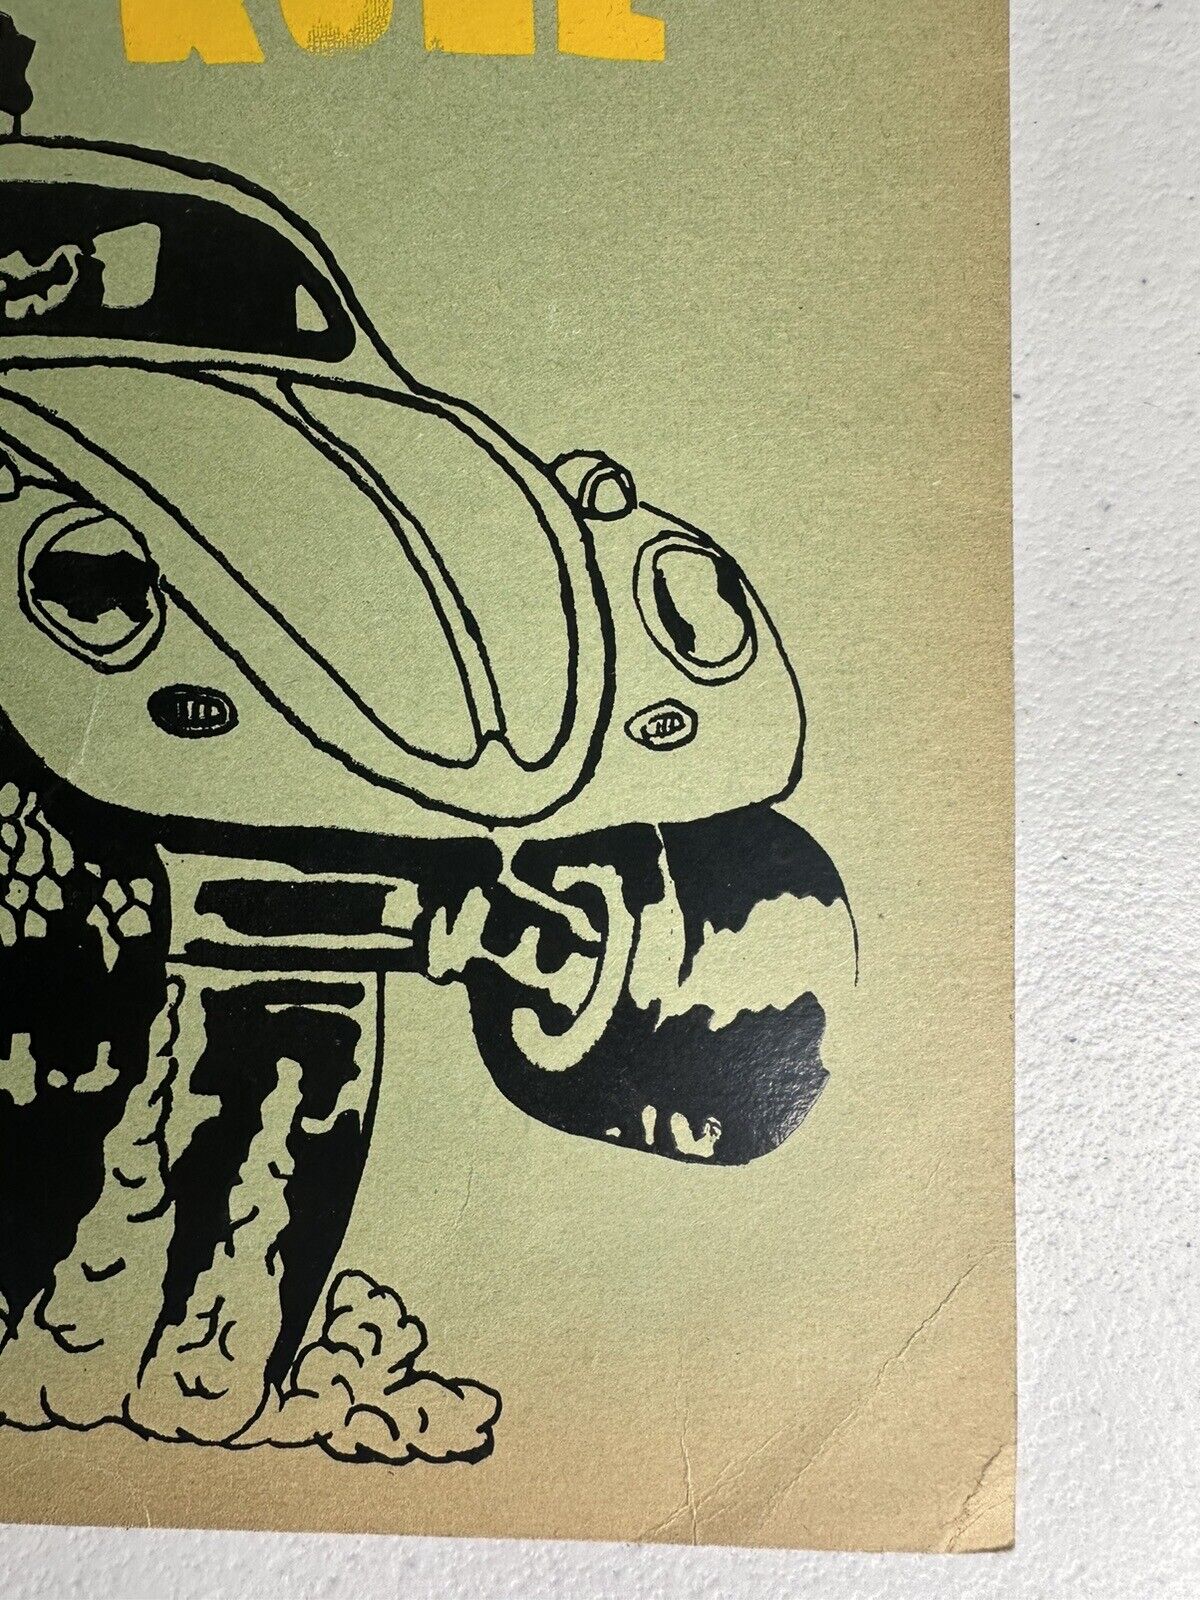 Vintage 1960s 'Volkswagens Rule' Gasser VW Bug Beetle Wall Art - Retro 10x10 Inch Gold-Toned Print - TreasuTiques